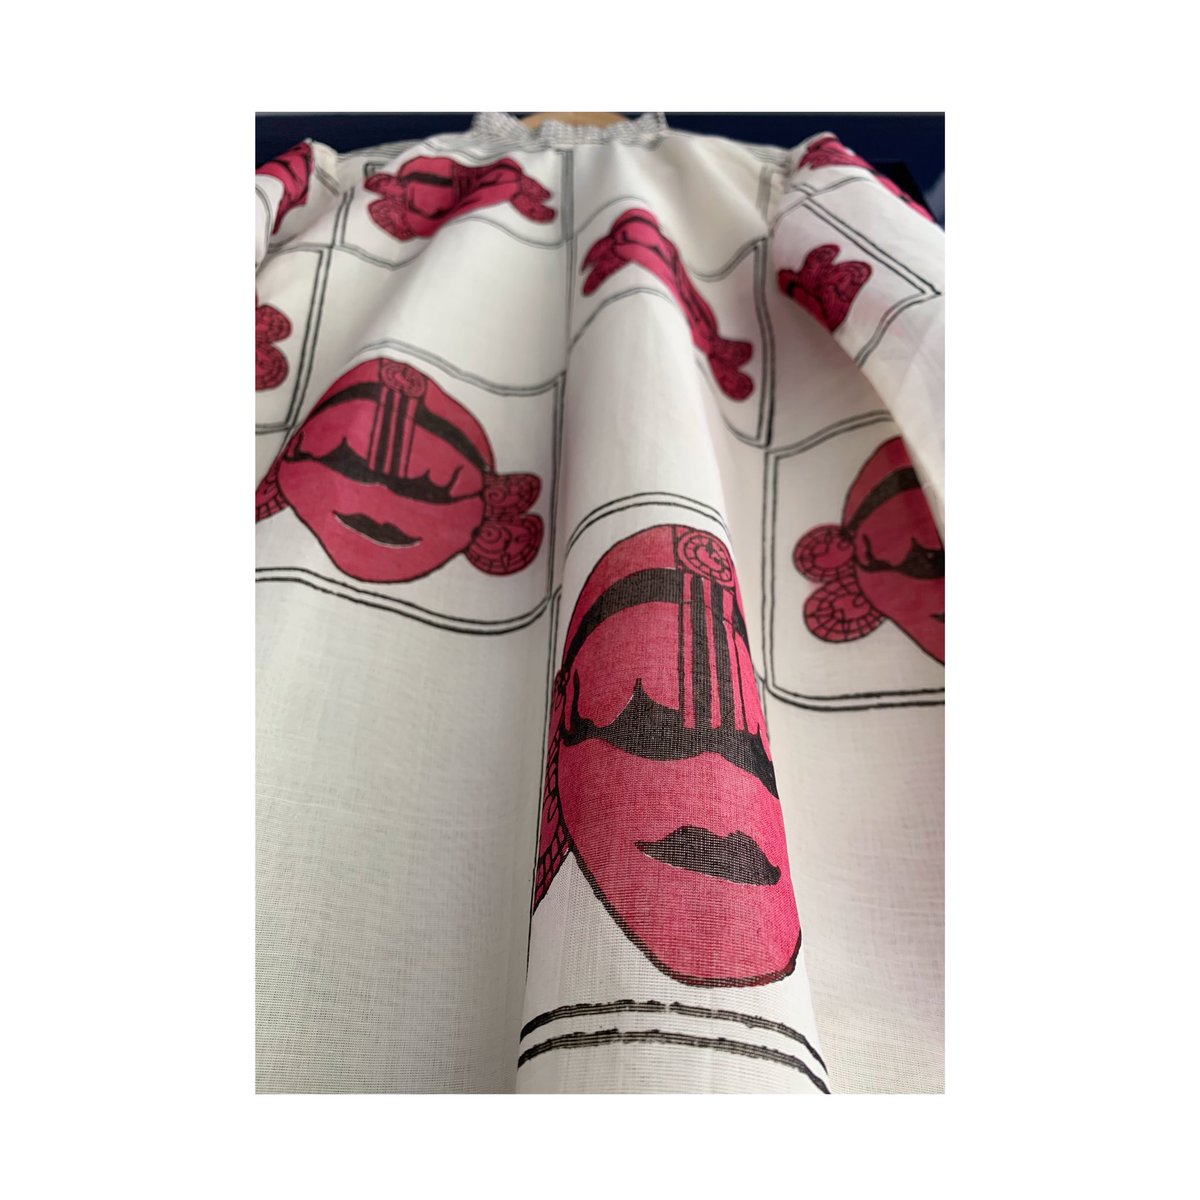 Jebsispar Best Selling HandMade Big Ben Ruffke Dress!
Now available!!!
#jebsispar by #jebinjohny #ecofriendly #handmade #artisanalclothing #artisanalfashion #handloom #handloomcotton #handprinted #sustainablefashion #ecofriendly #ecofashion #LFW #fashiondesigner #ceo #mumbai